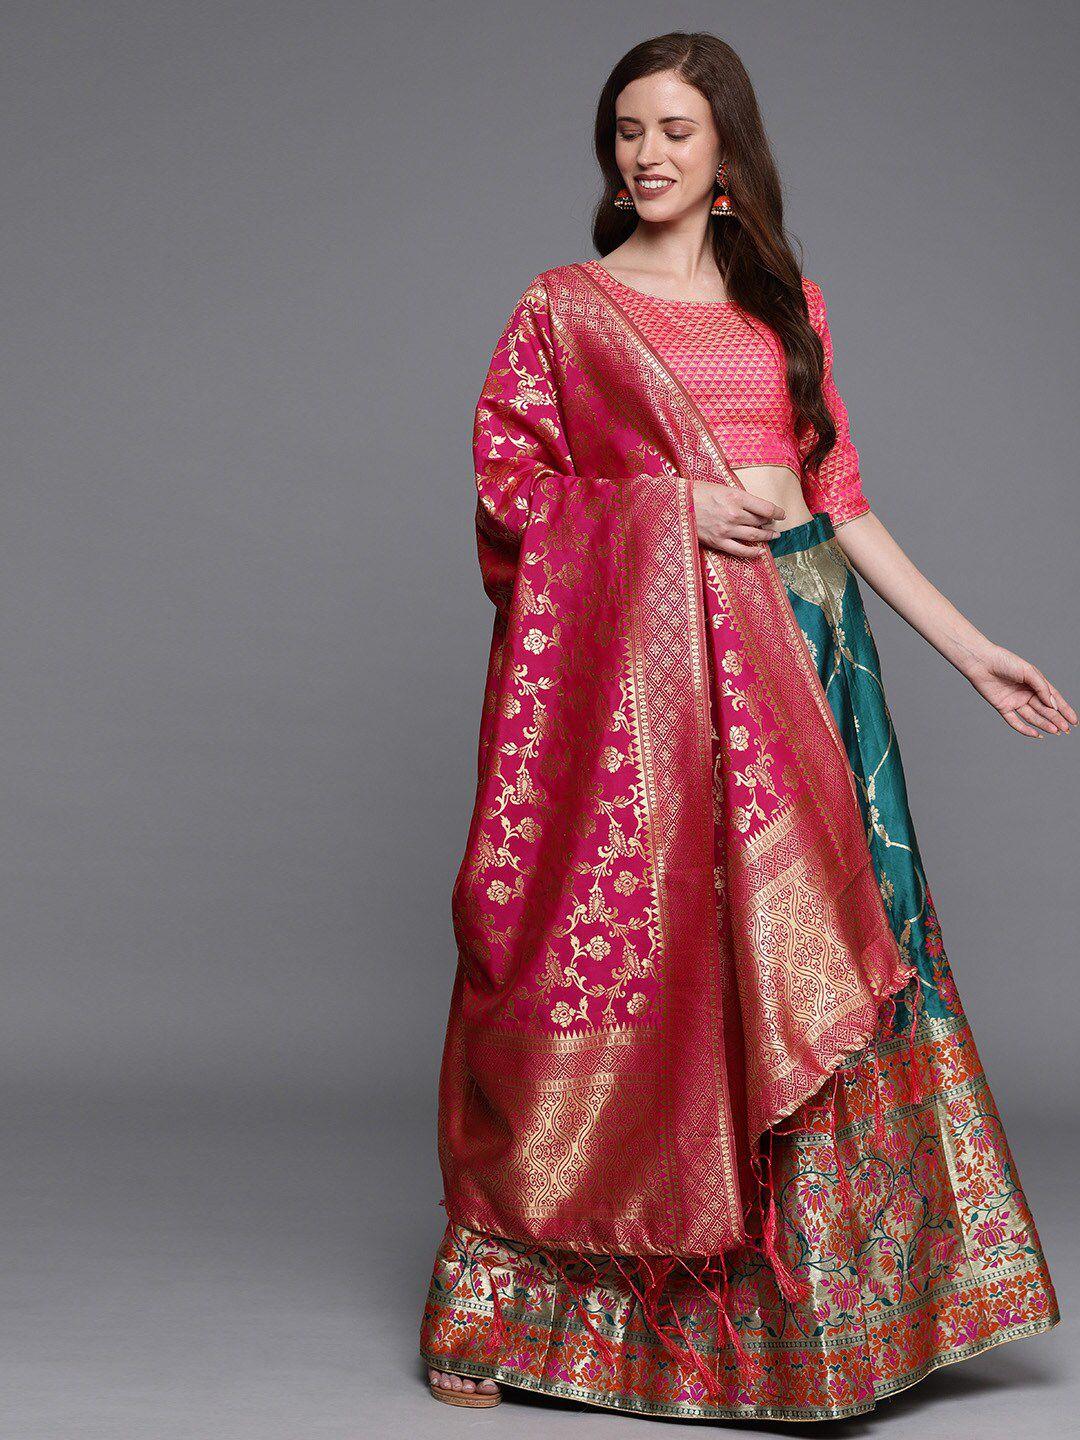 manvaa green & pink semi-stitched lehenga & unstitched blouse with dupatta